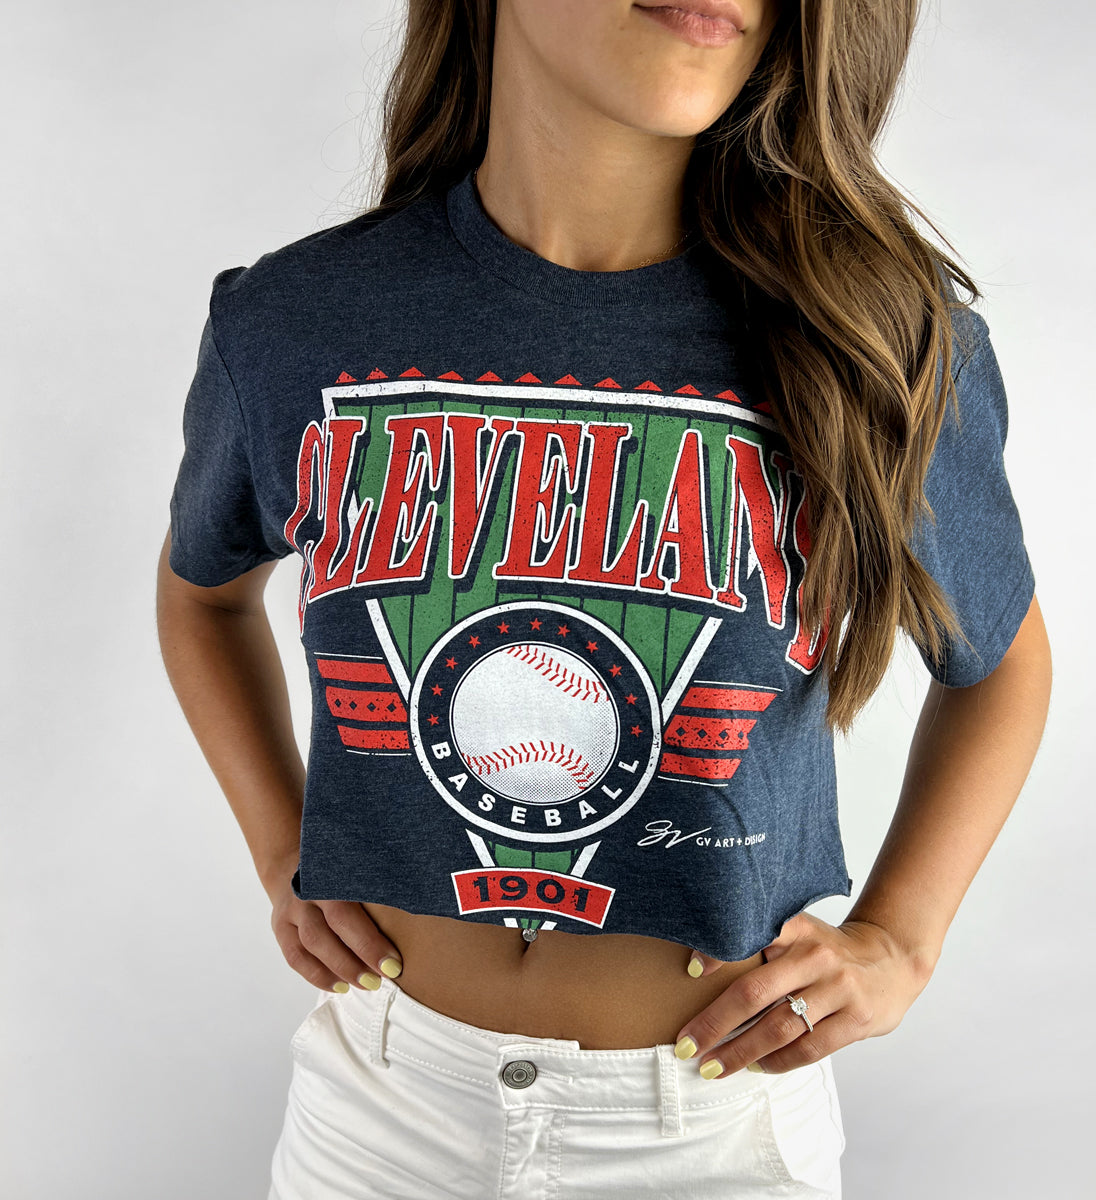 Women's Cleveland T-shirts, Sweatshirts and Apparel